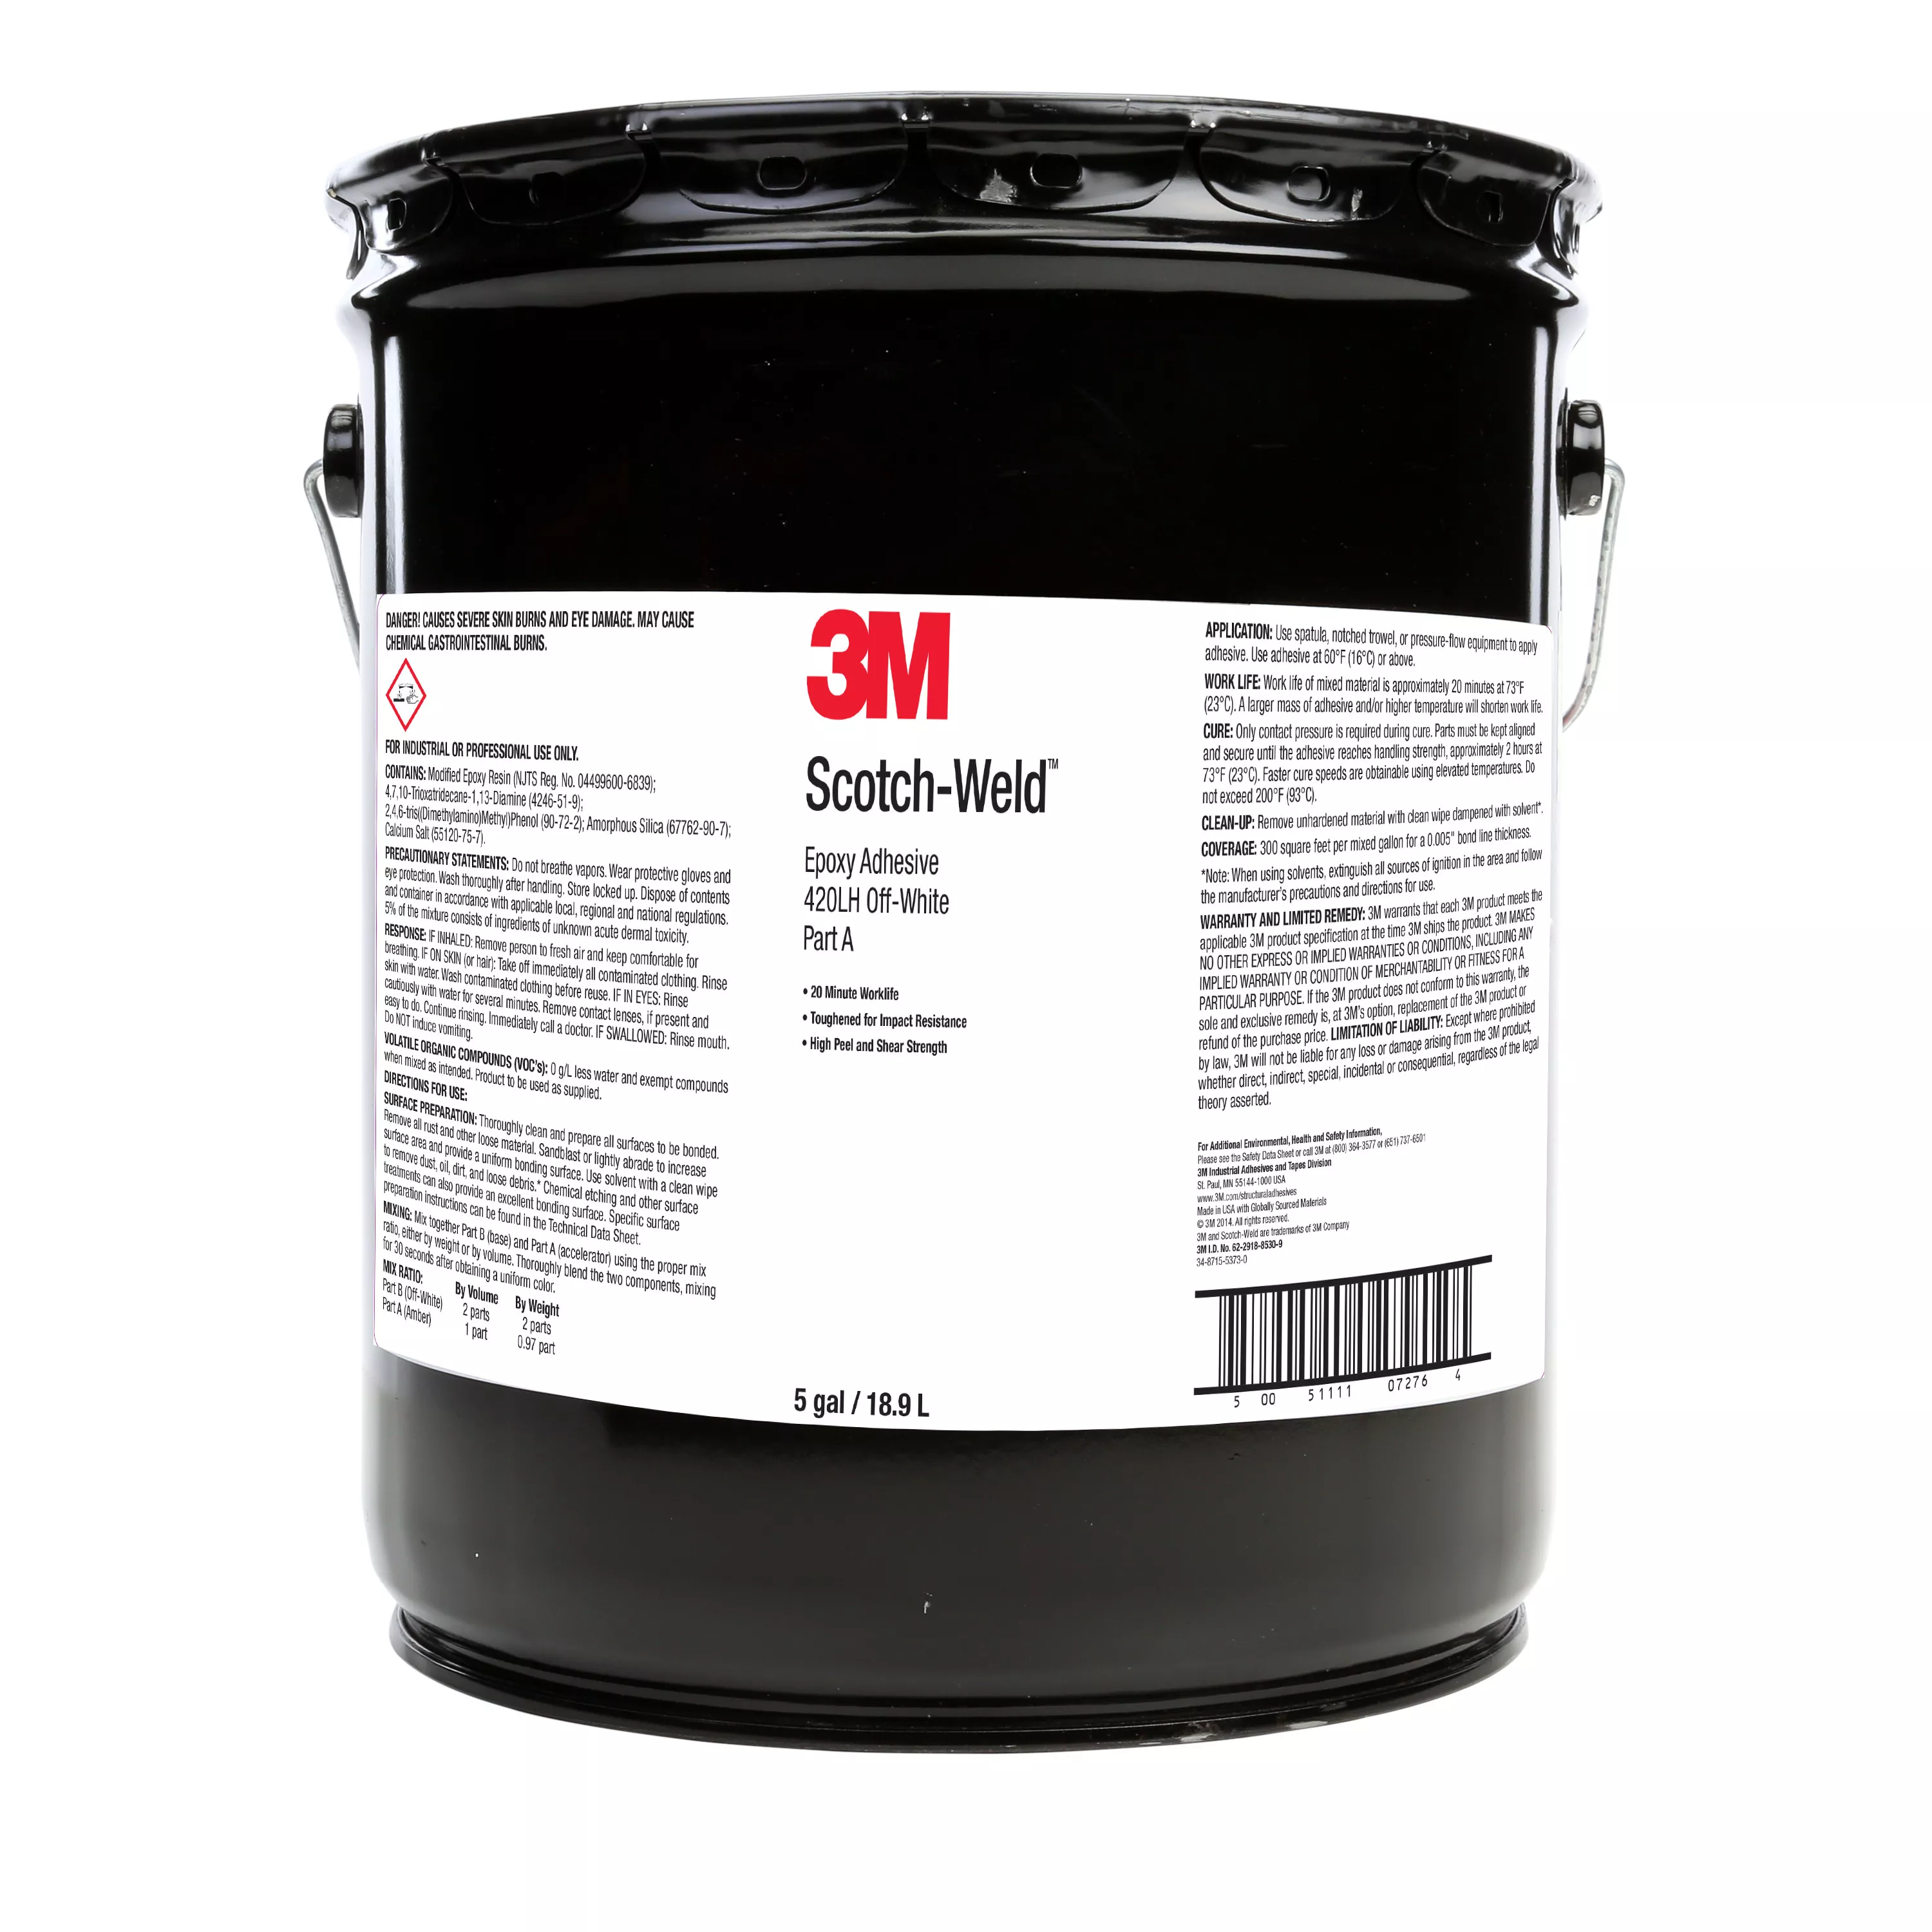 3M™ Scotch-Weld™ Epoxy Adhesive 420LH, Off-White, Part A, 5 Gallon
(Pail), Drum